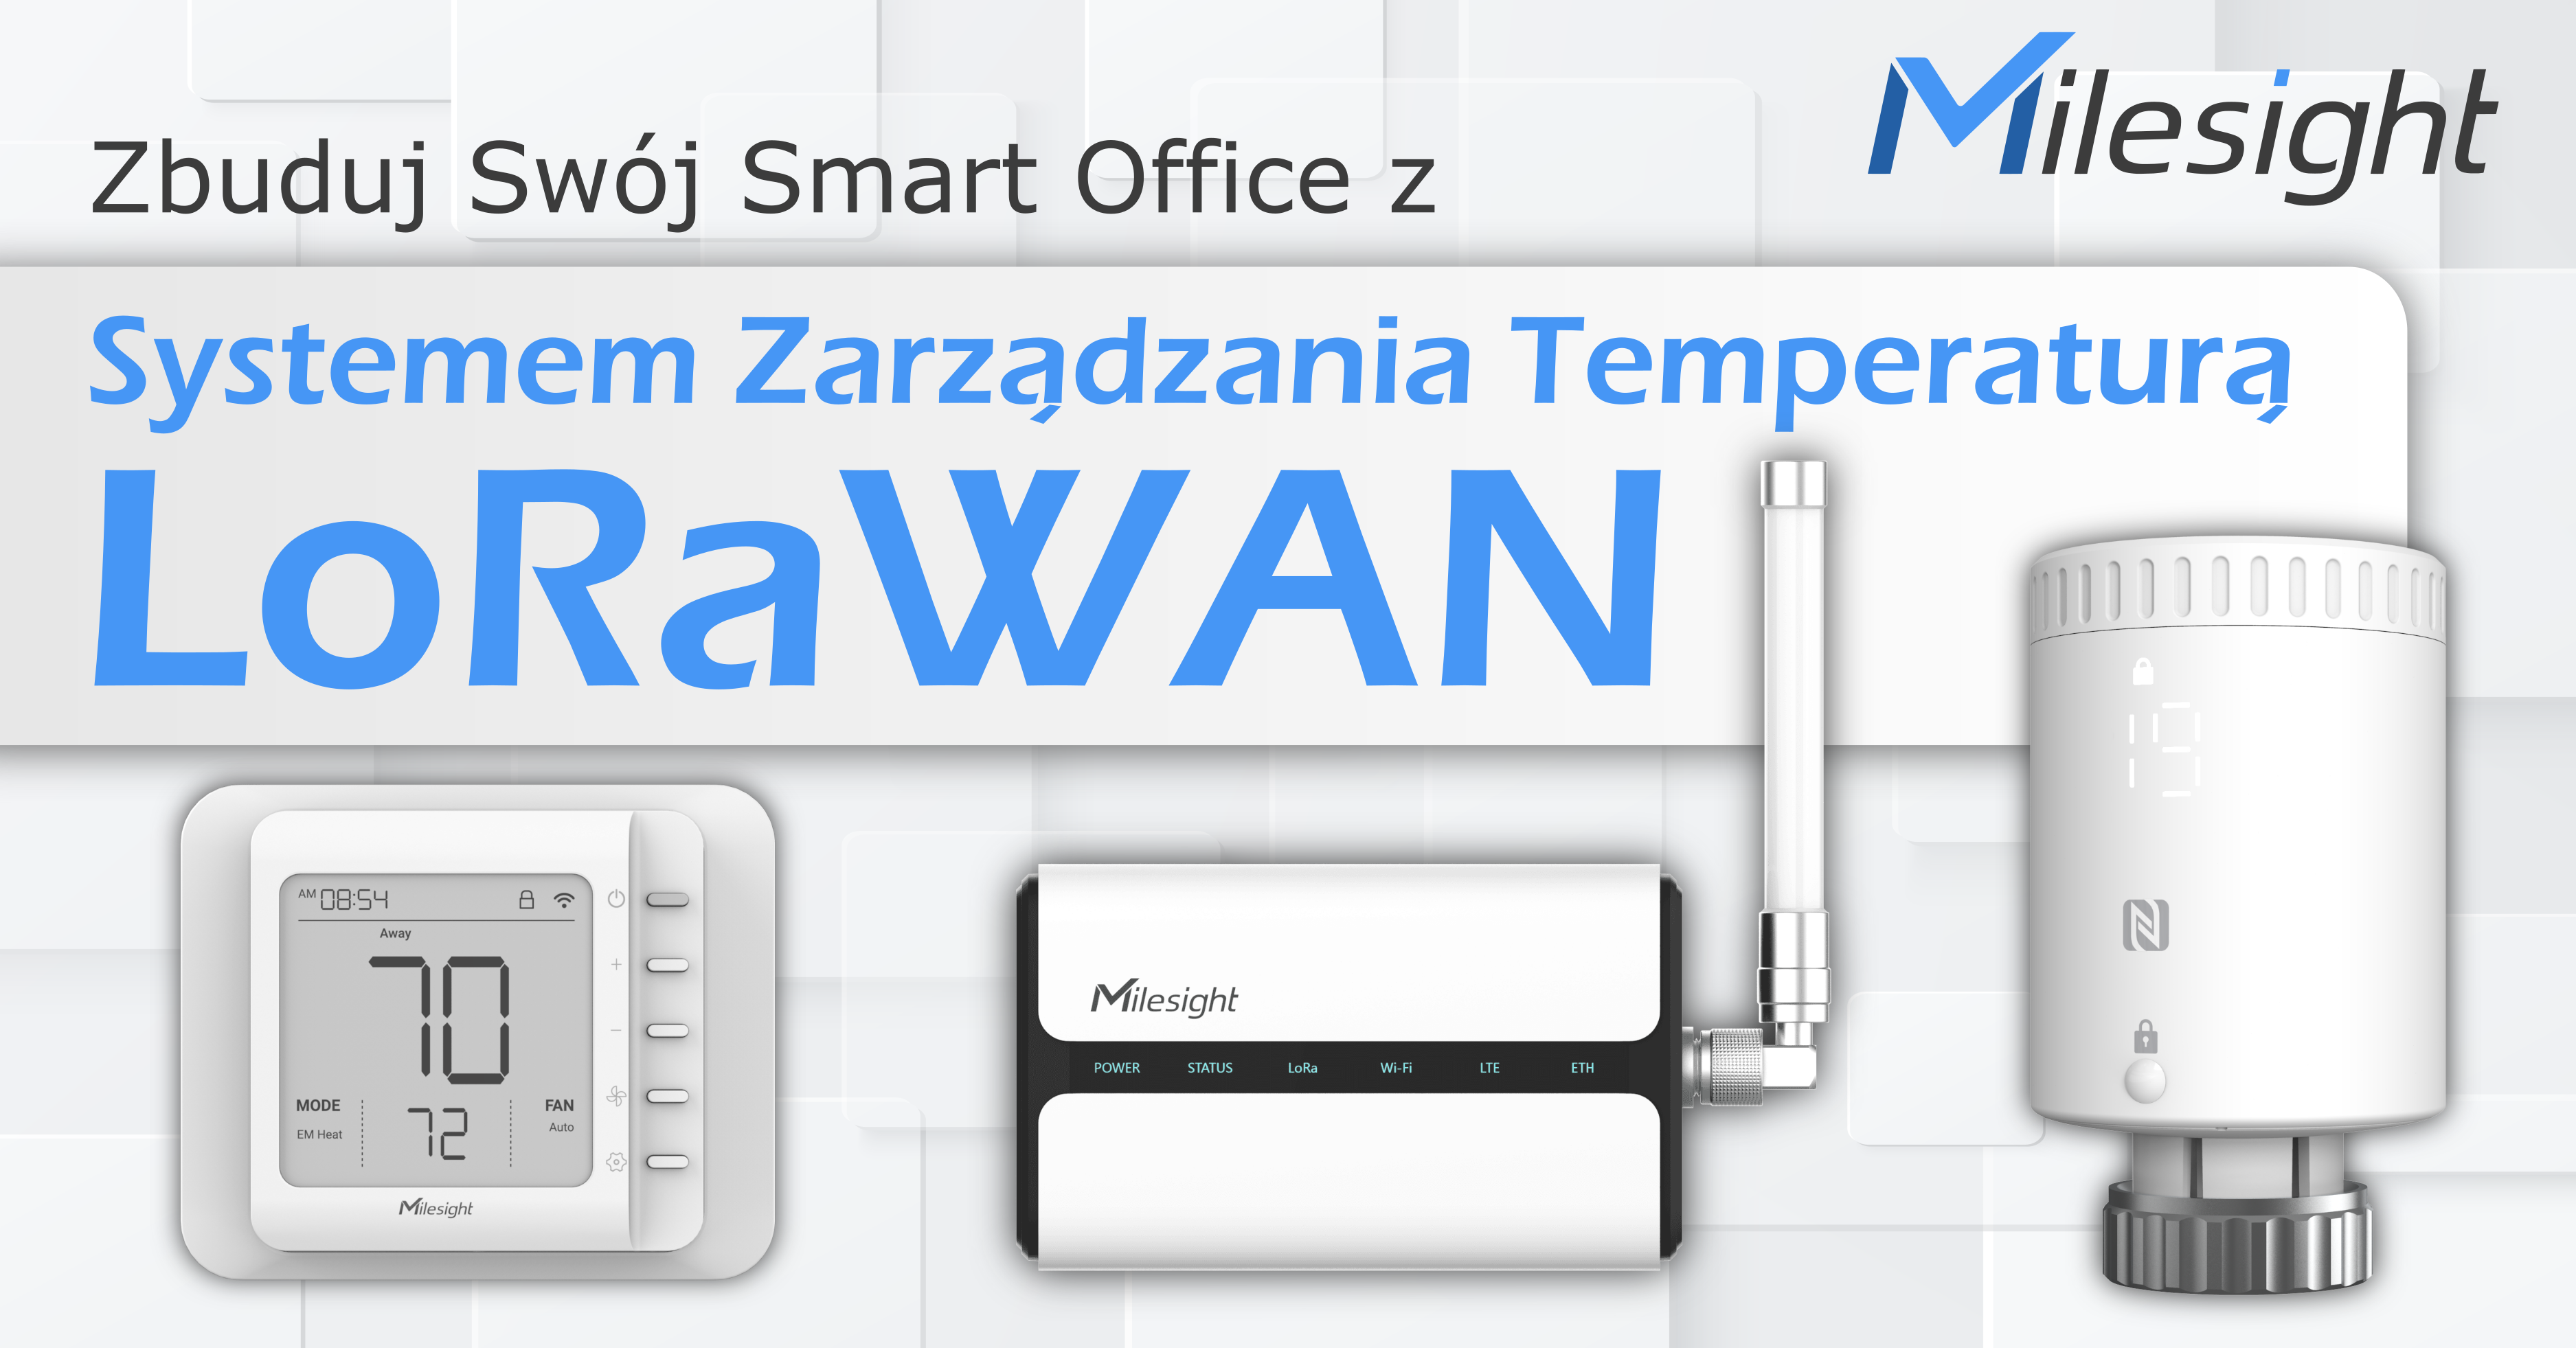 Milesight Zarządzanie Temperaturą Smart Office